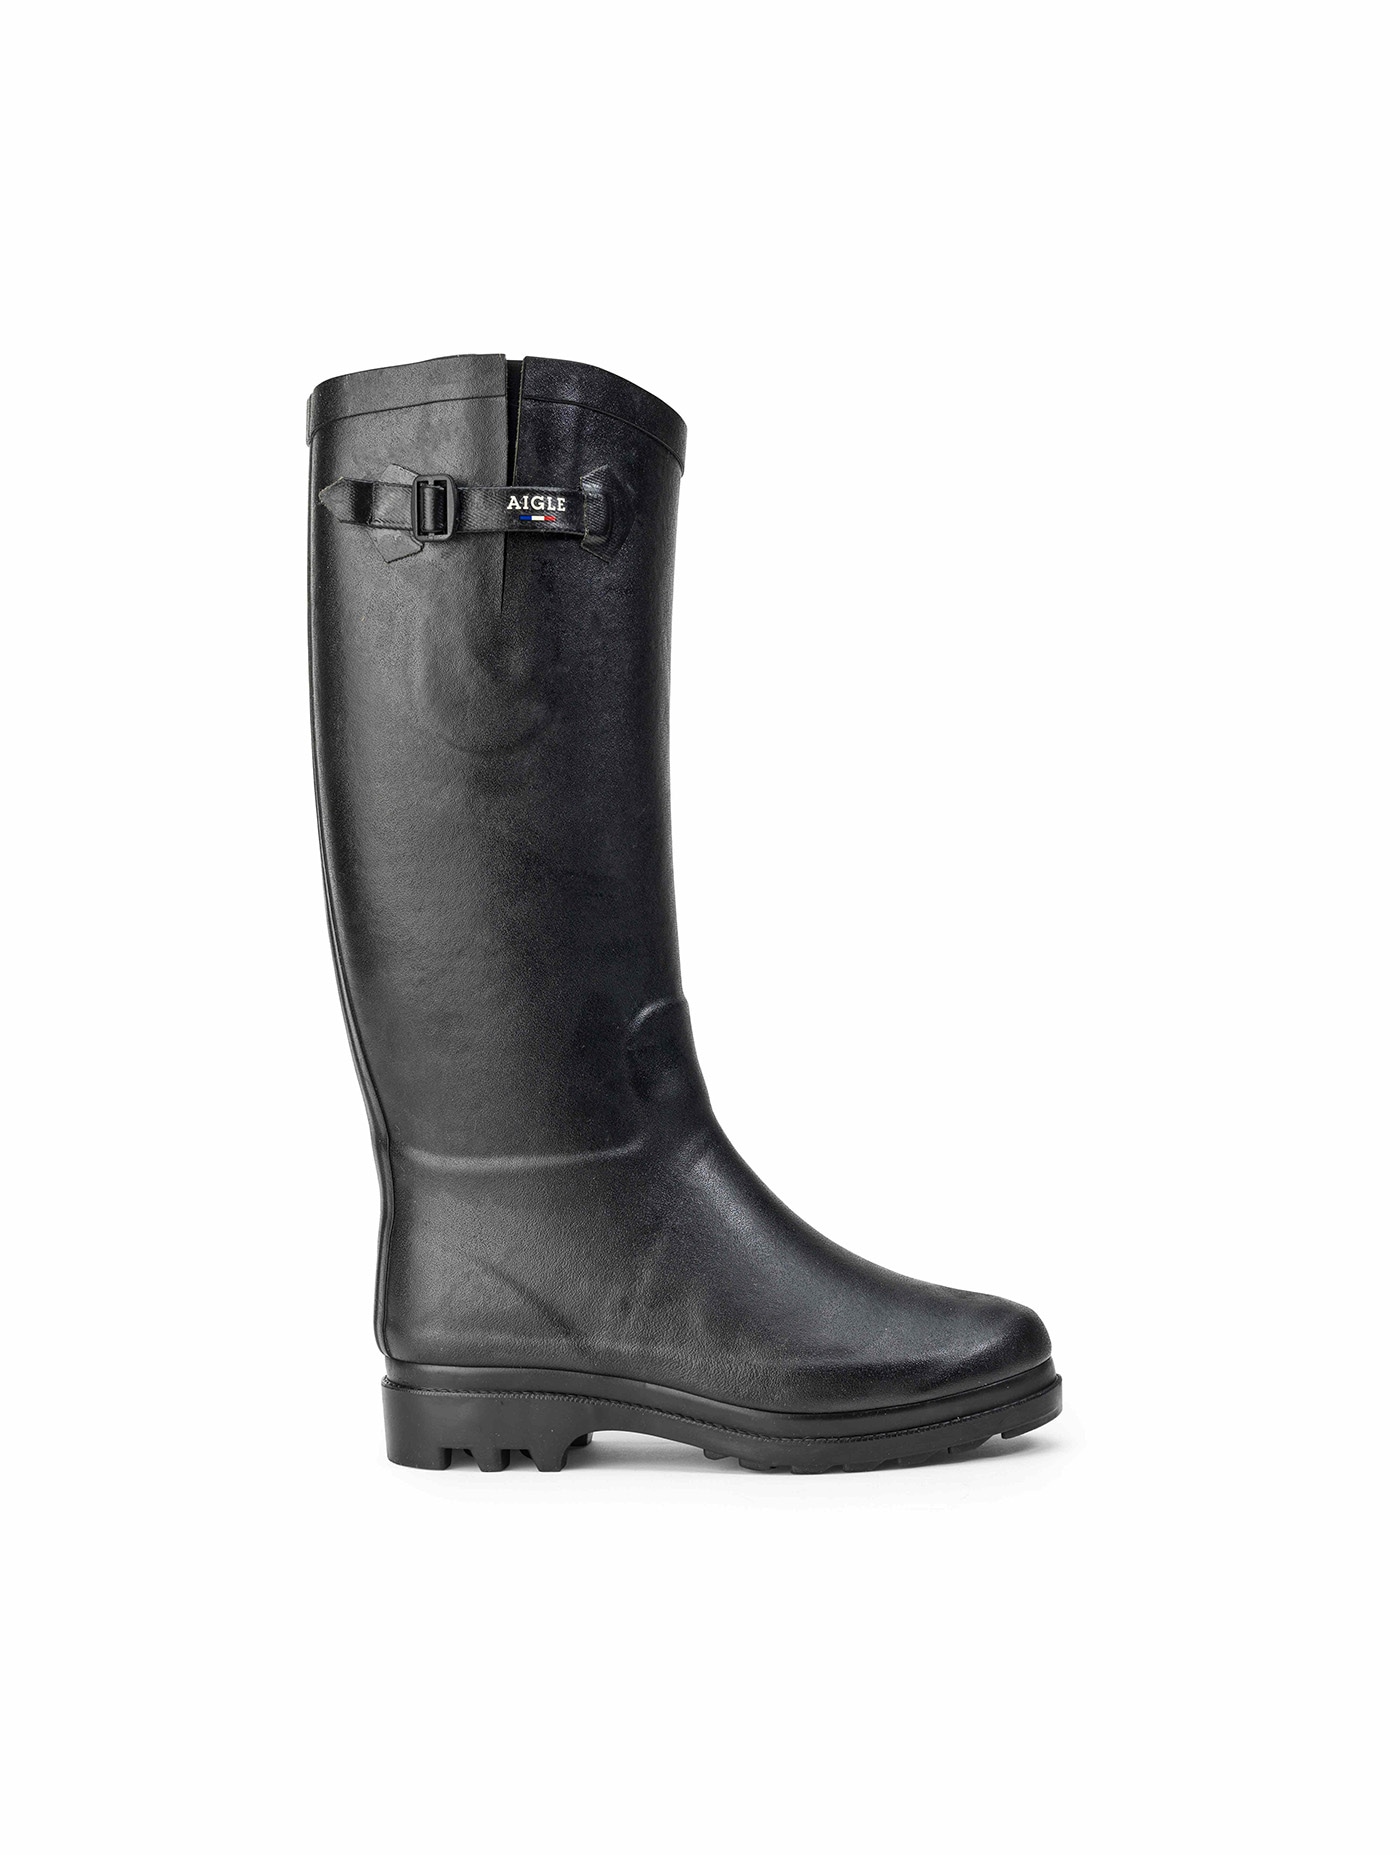 Aigle - Women's fur-lined rubber boots Metallic/noir - Aiglentine®women ...